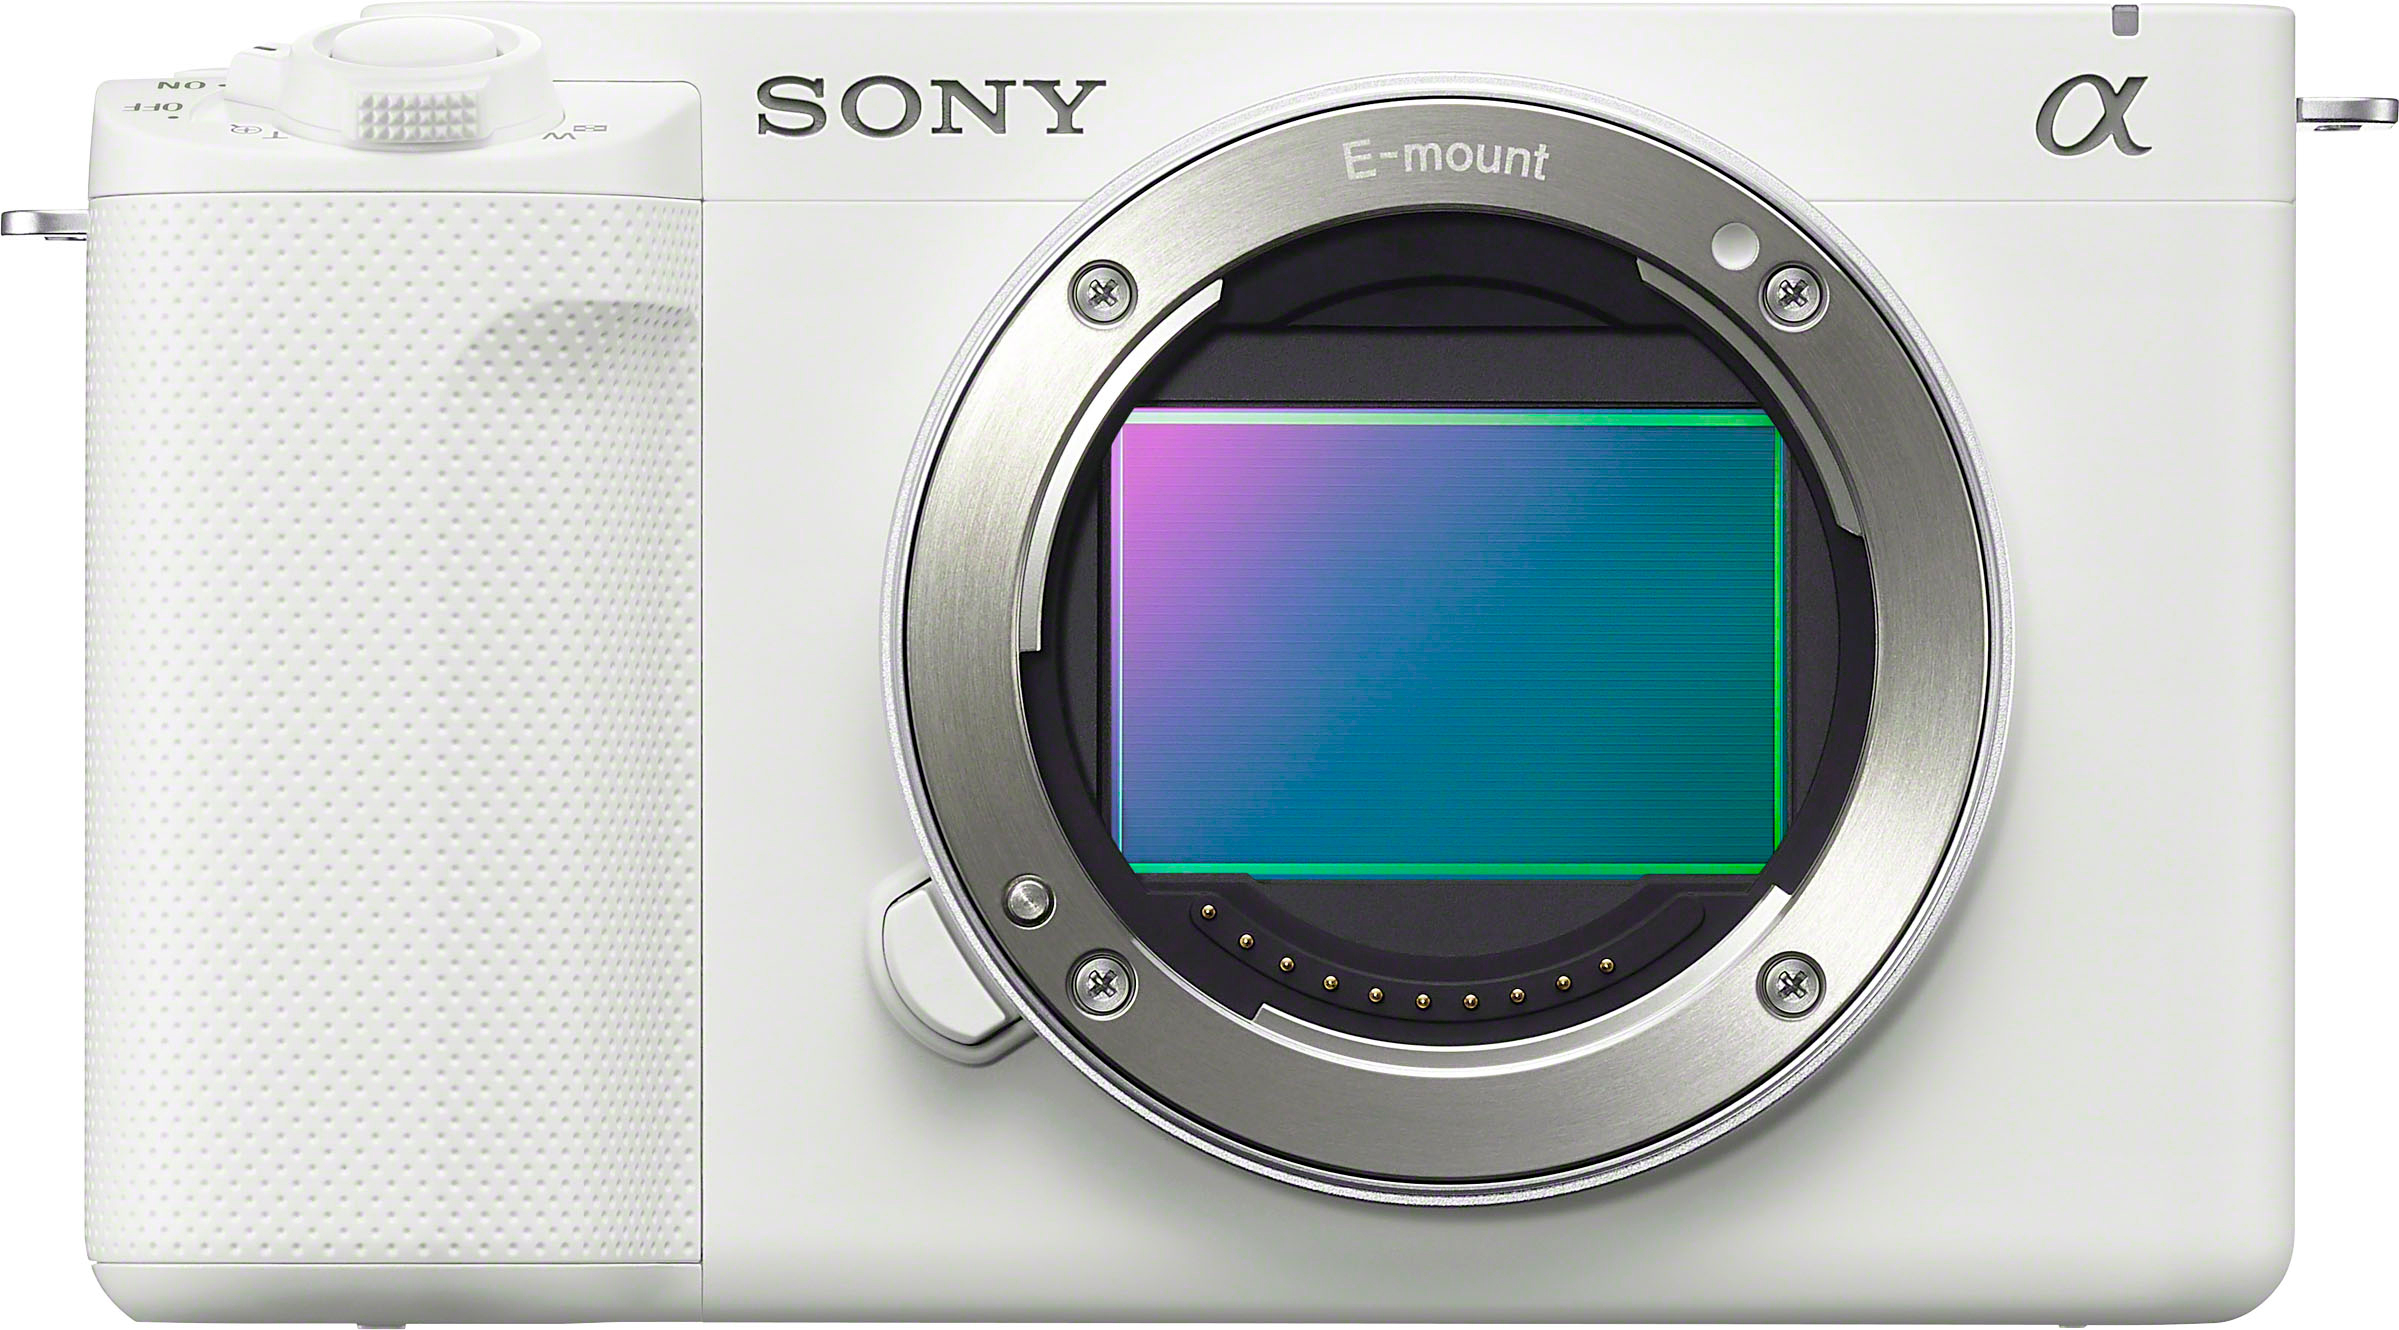  Sony Alpha ZV-E1 Full-Frame Vlog Mirrorless Lens Camera (Black)  (ILCZVE1/B) + Case + 64GB Card + Card Reader + Flex Tripod + Memory Wallet  + Cleaning Kit (Renewed) : Electronics